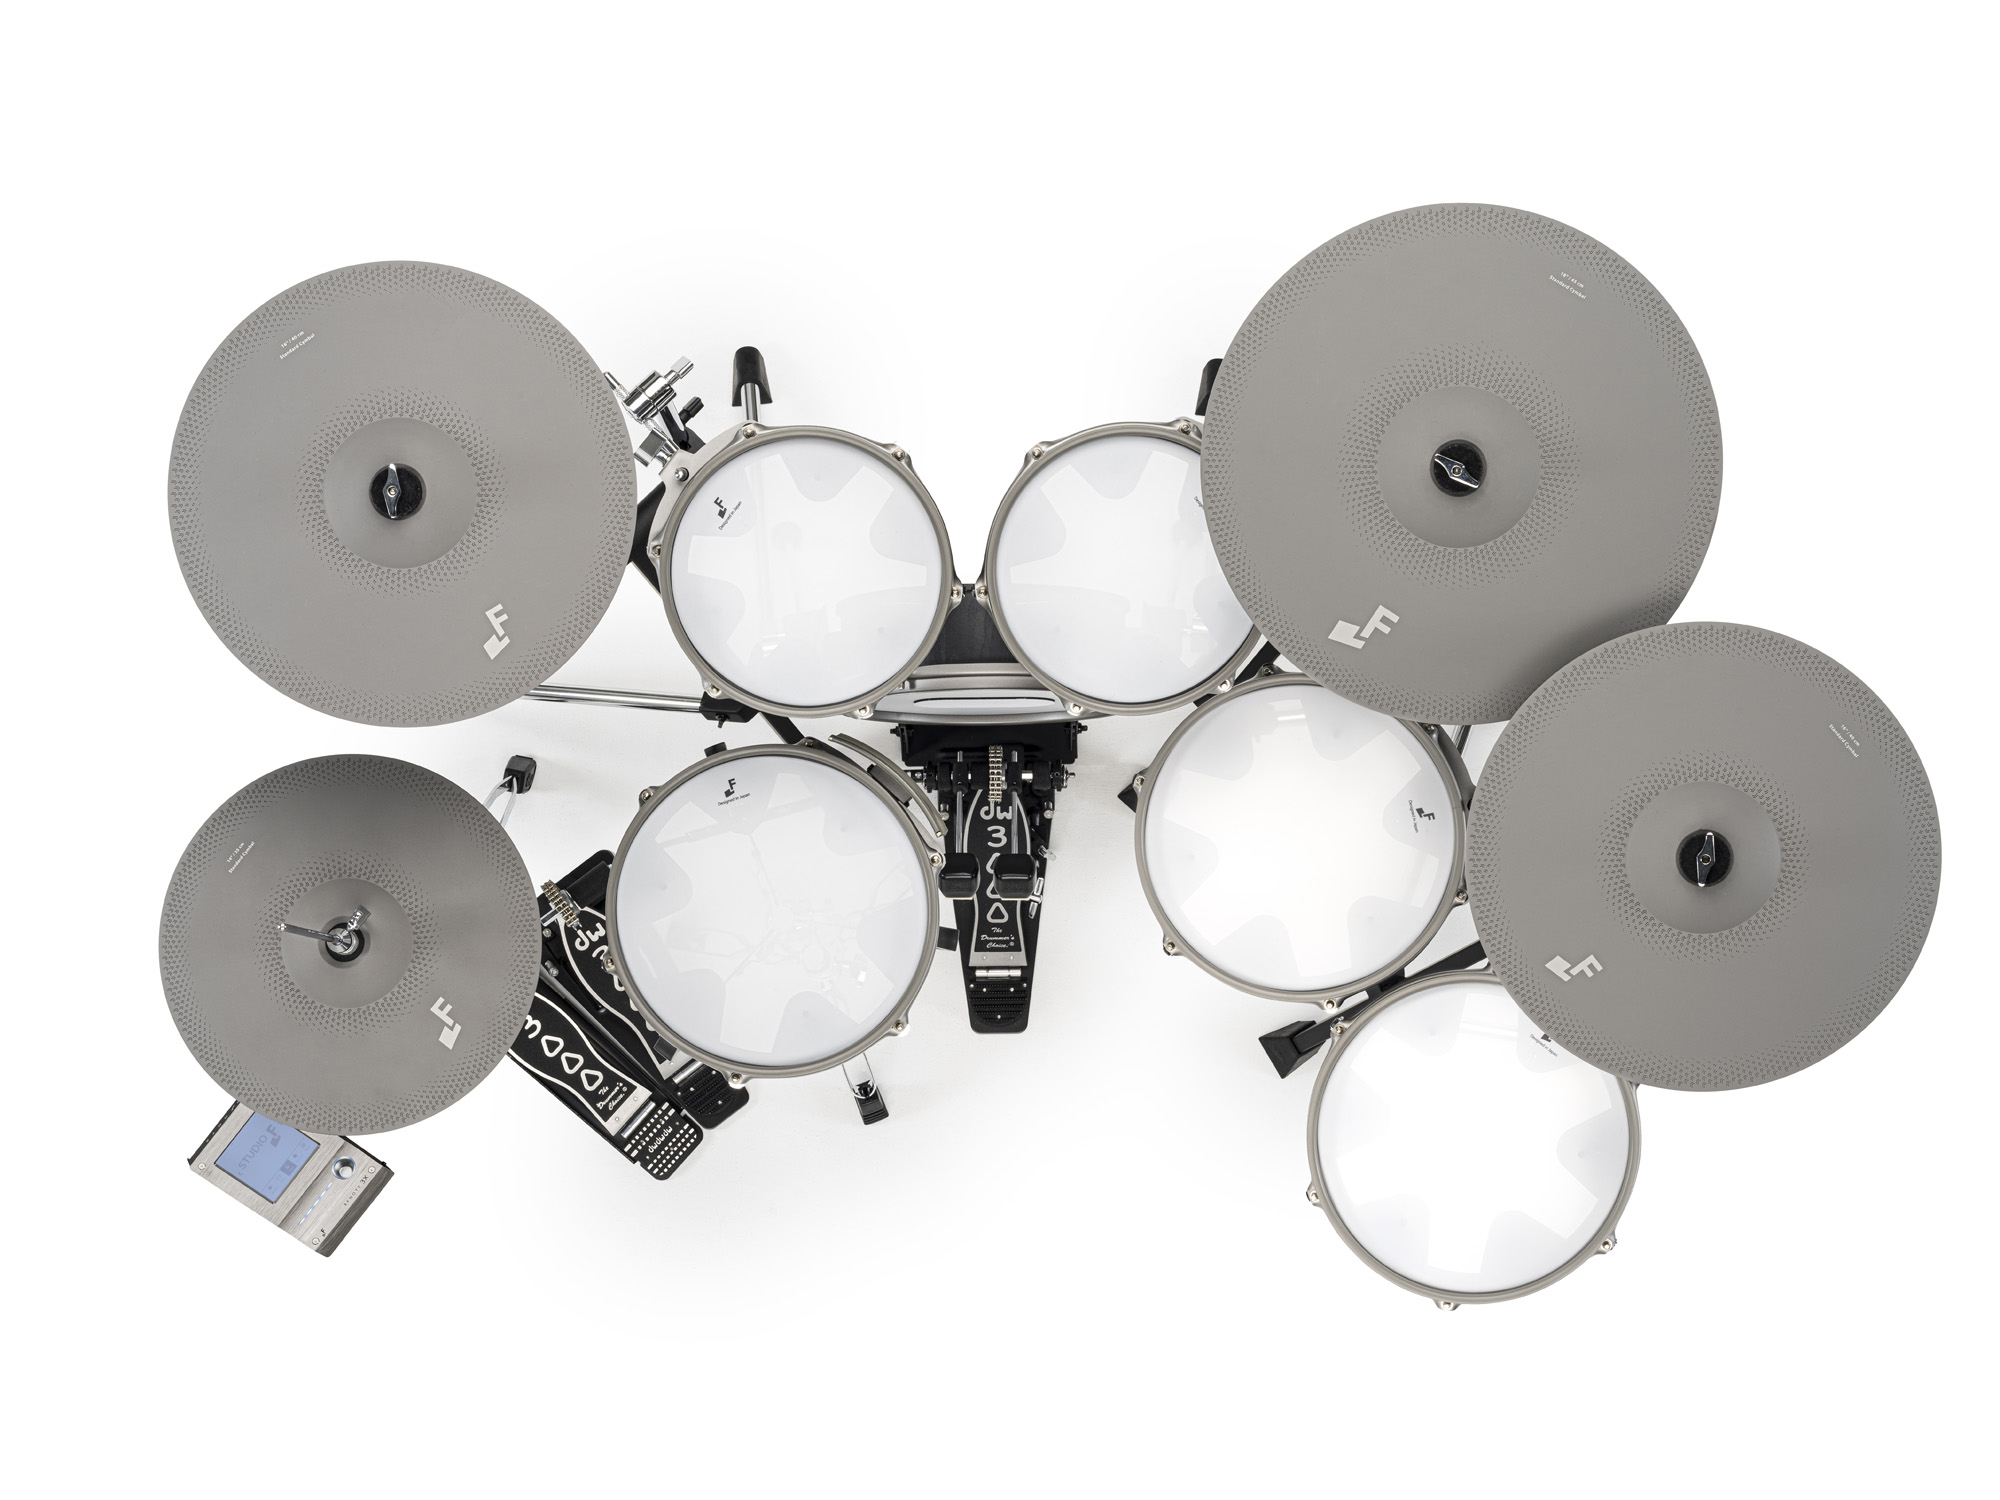 Efnote Efd3x Drum Kit - Electronic drum kit & set - Variation 4